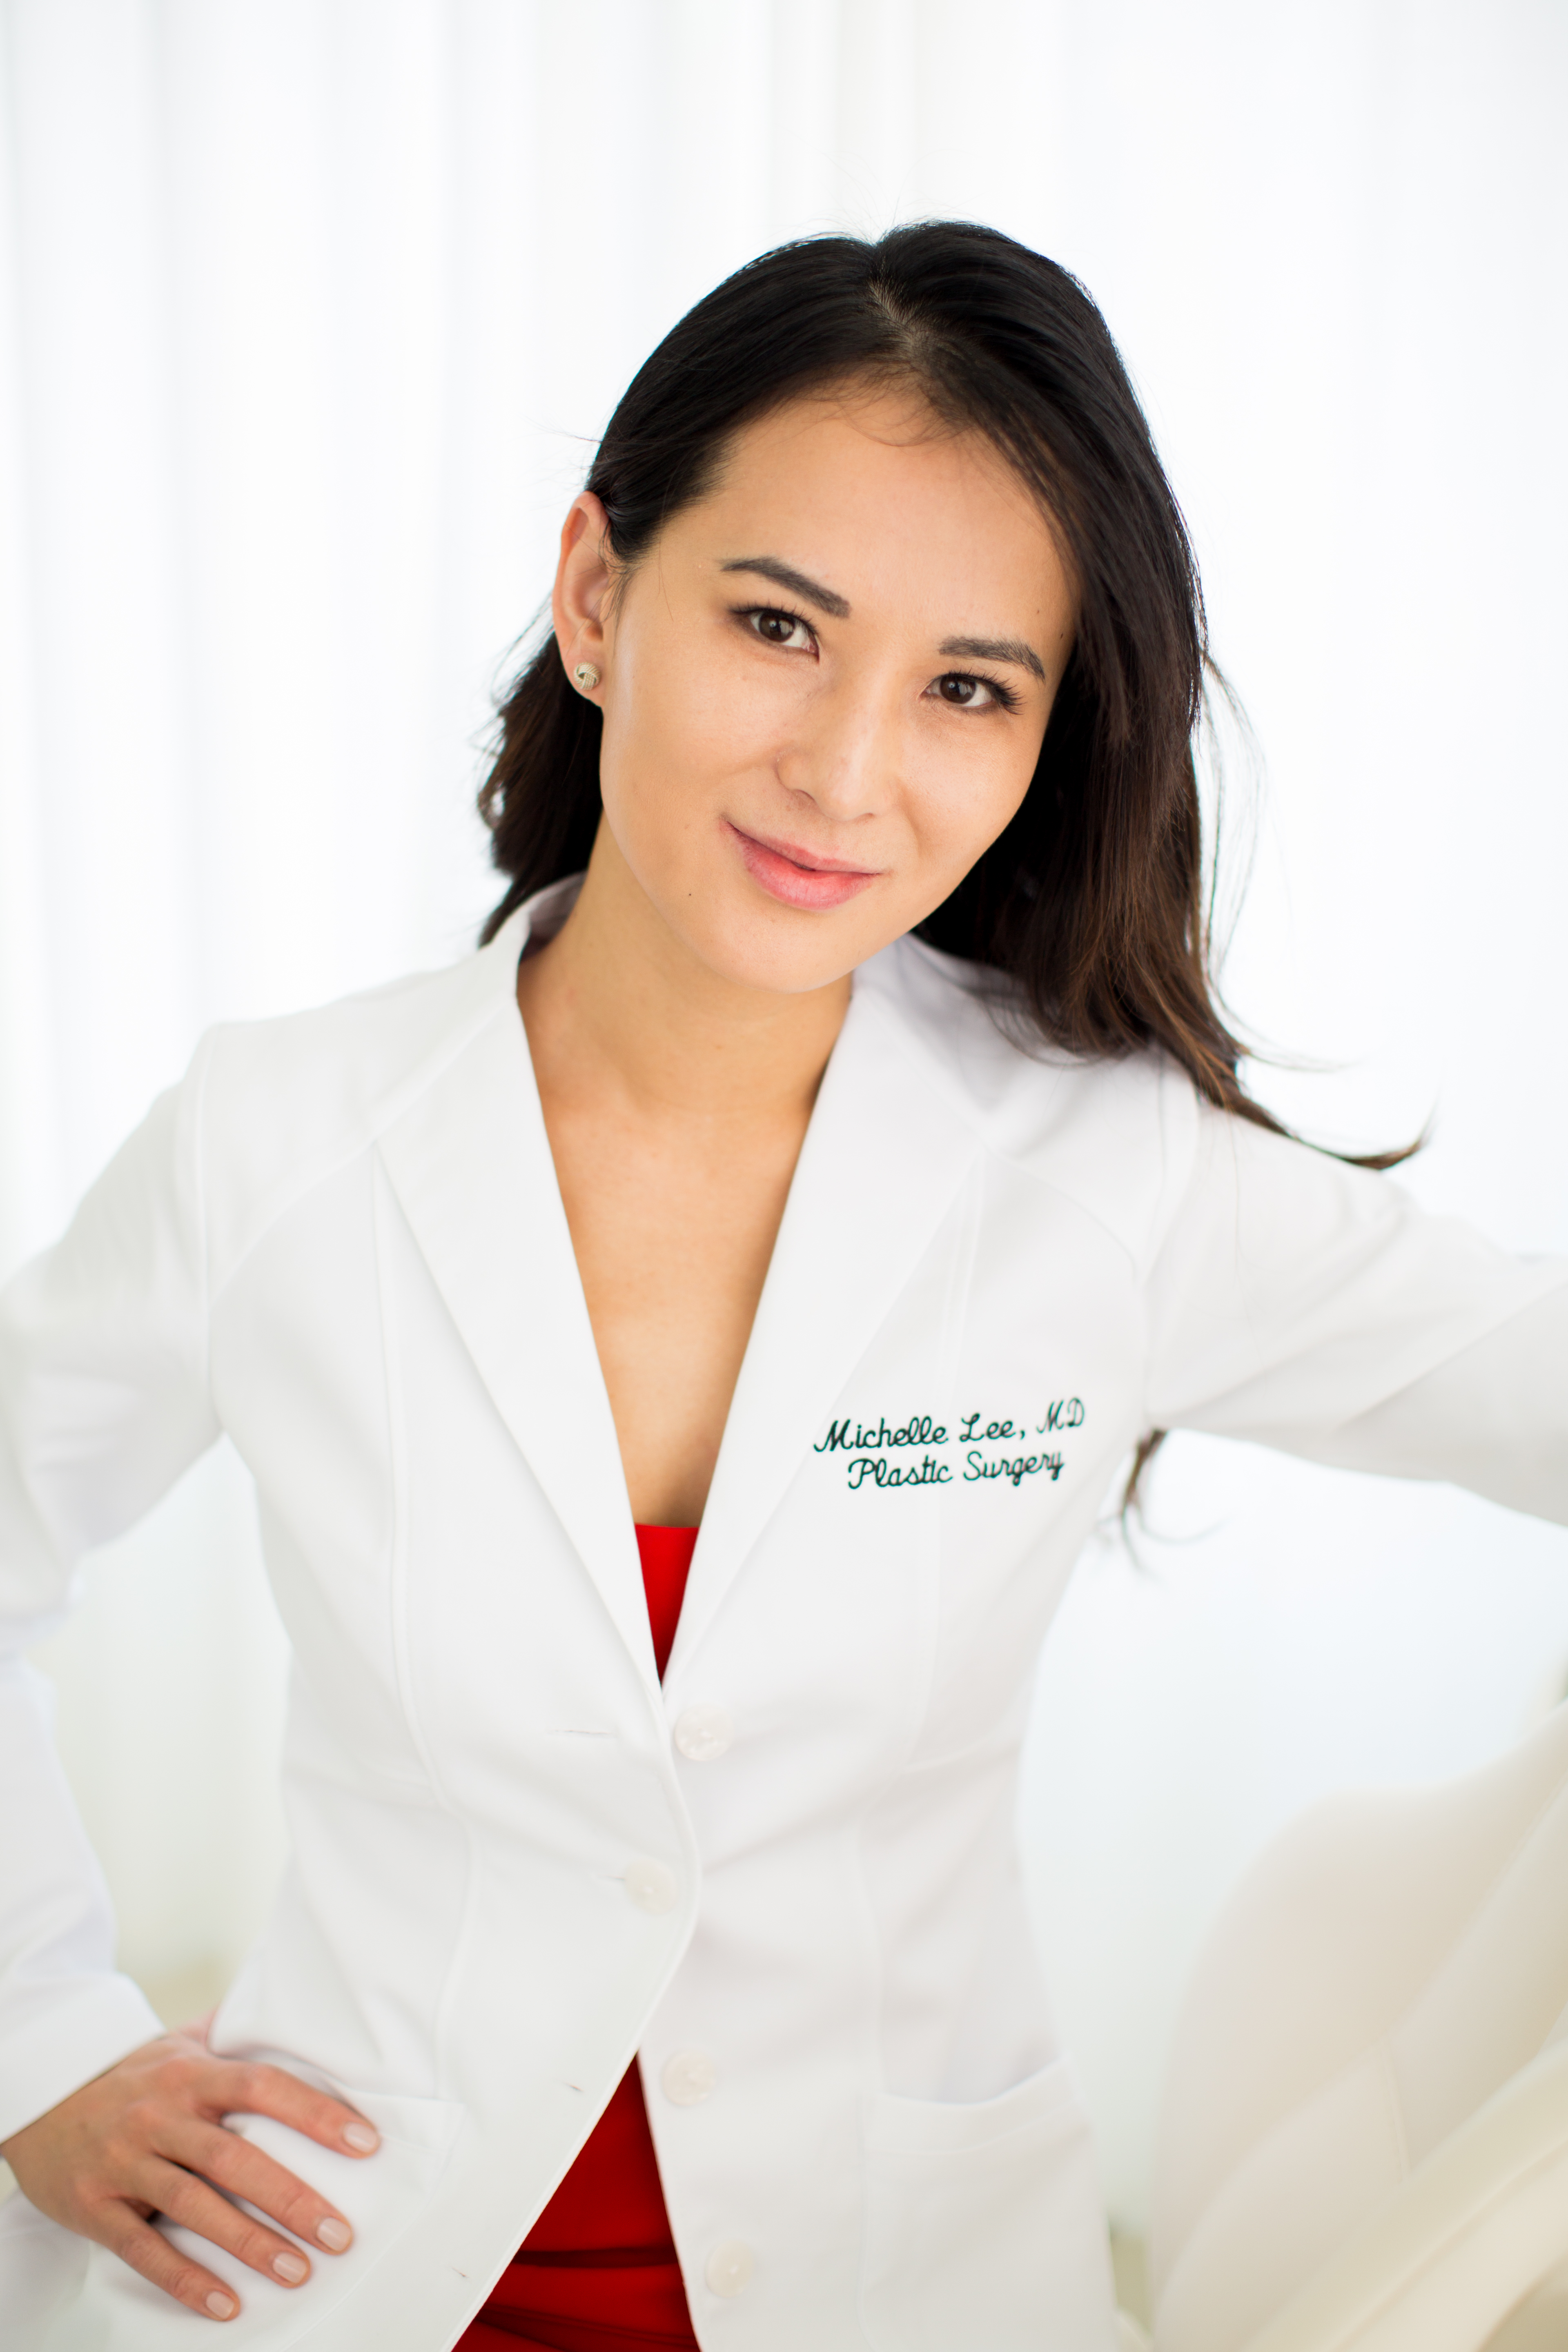 Dr. Michelle Lee in her doctor's coat